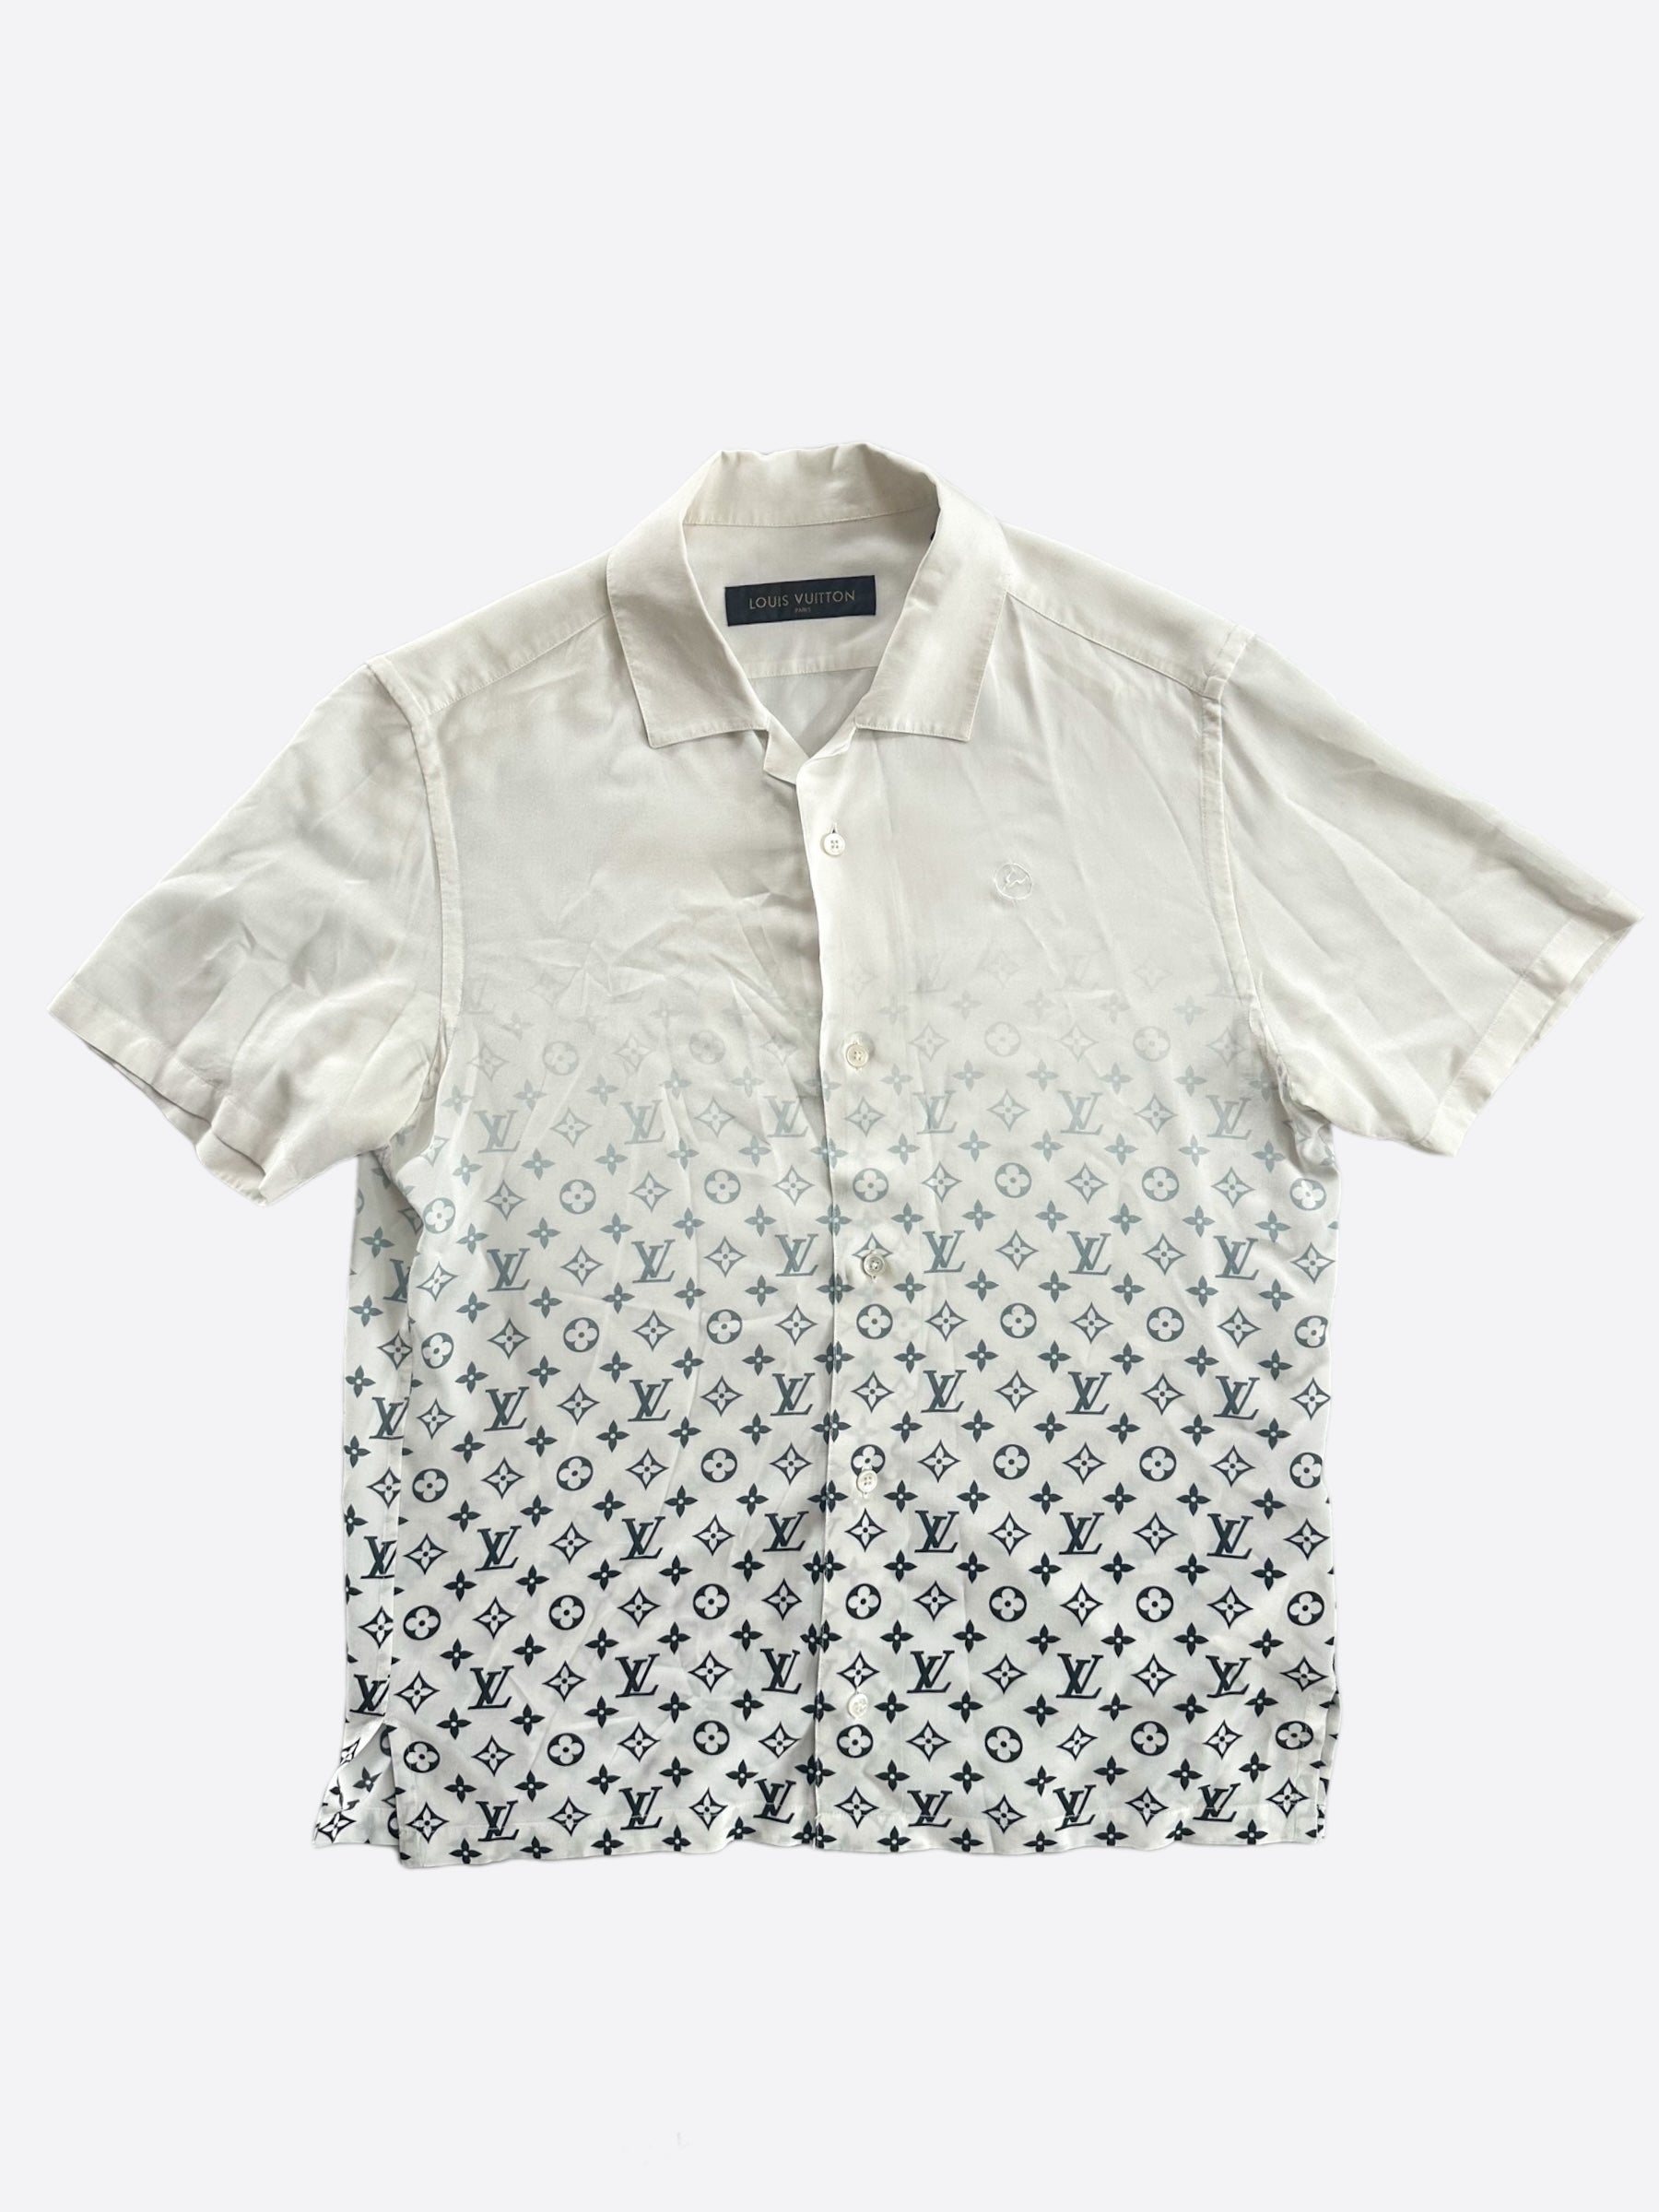 Louis Vuitton Fragment White u0026 Black Gradient Button Up Shirt